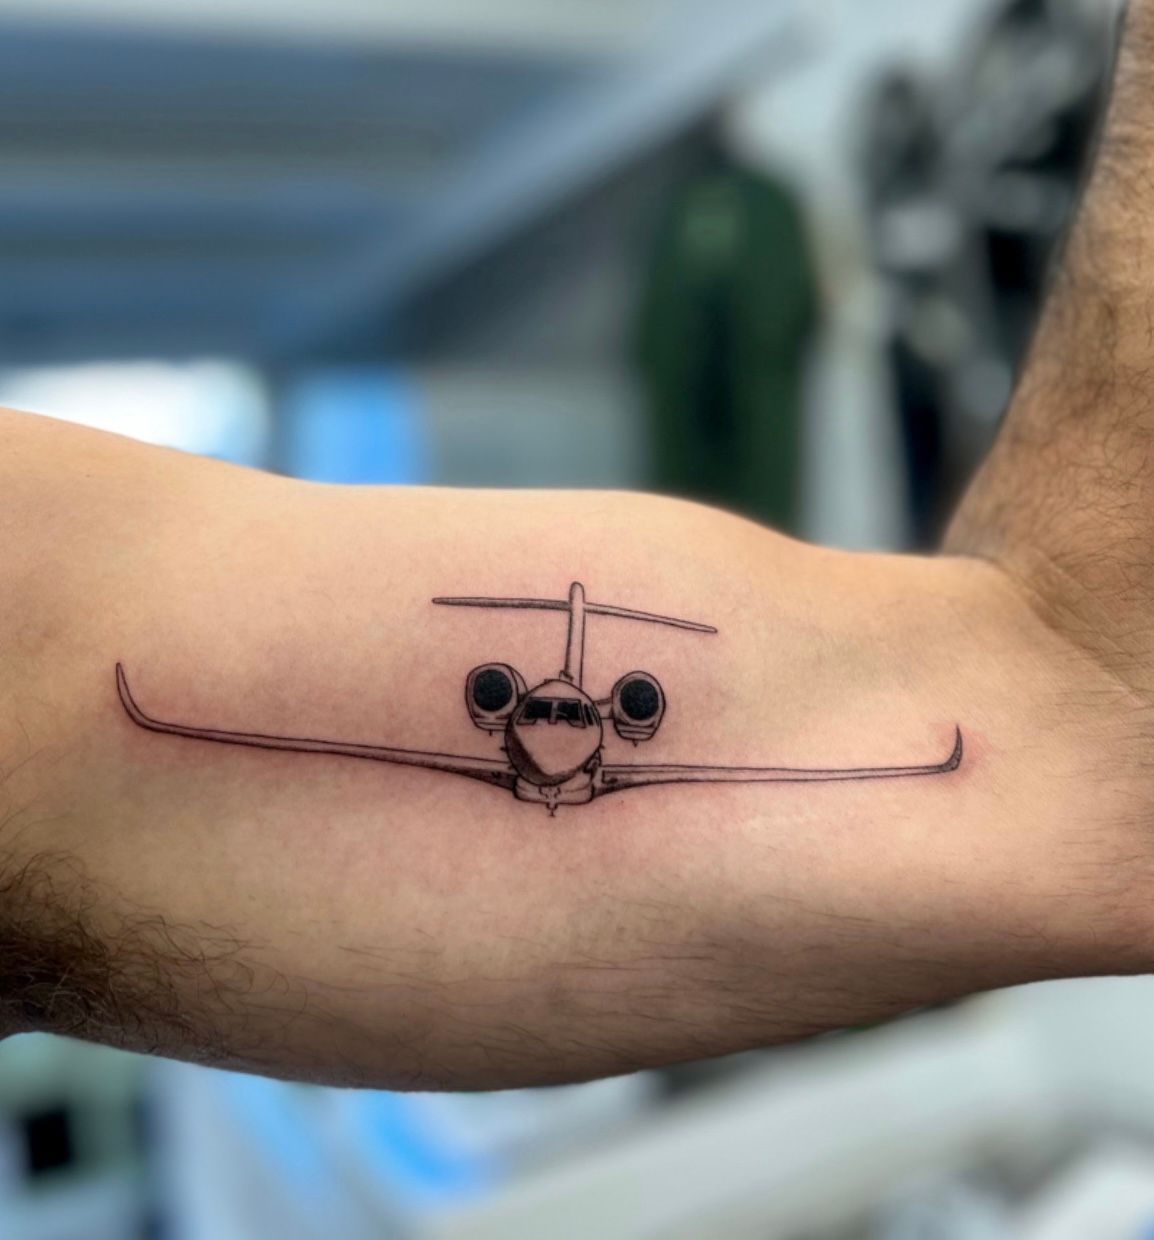 Plane tattoo | Airplane tattoos, Subtle tattoos, Dainty tattoos